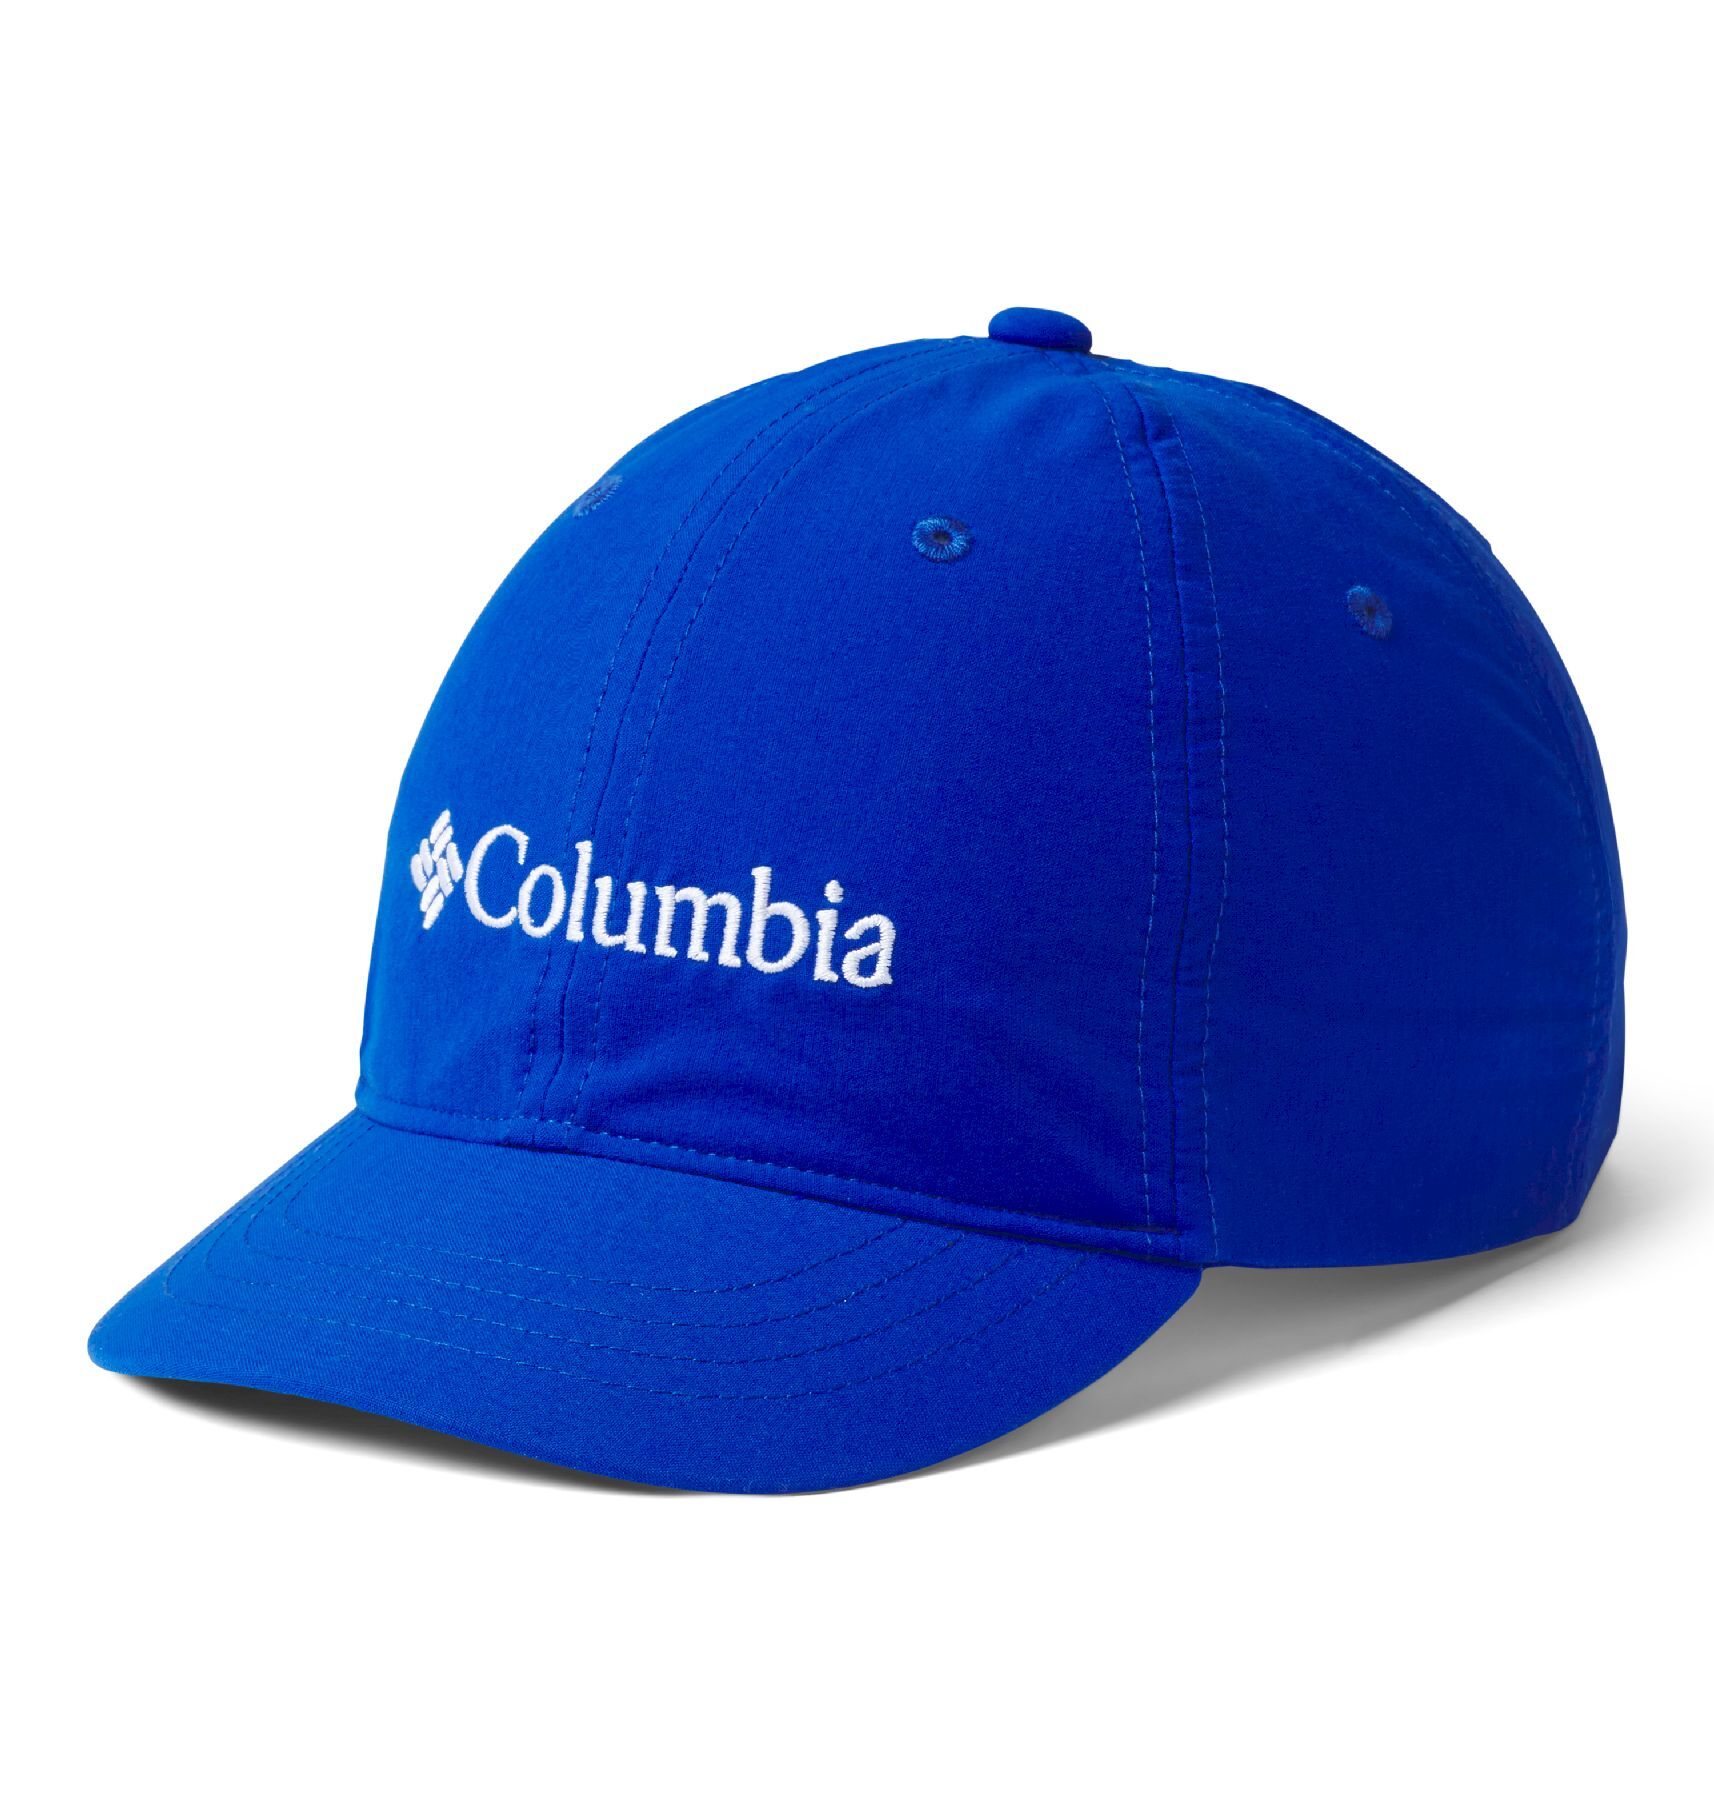 Columbia Youth Adjustable Ball Cap - Cap